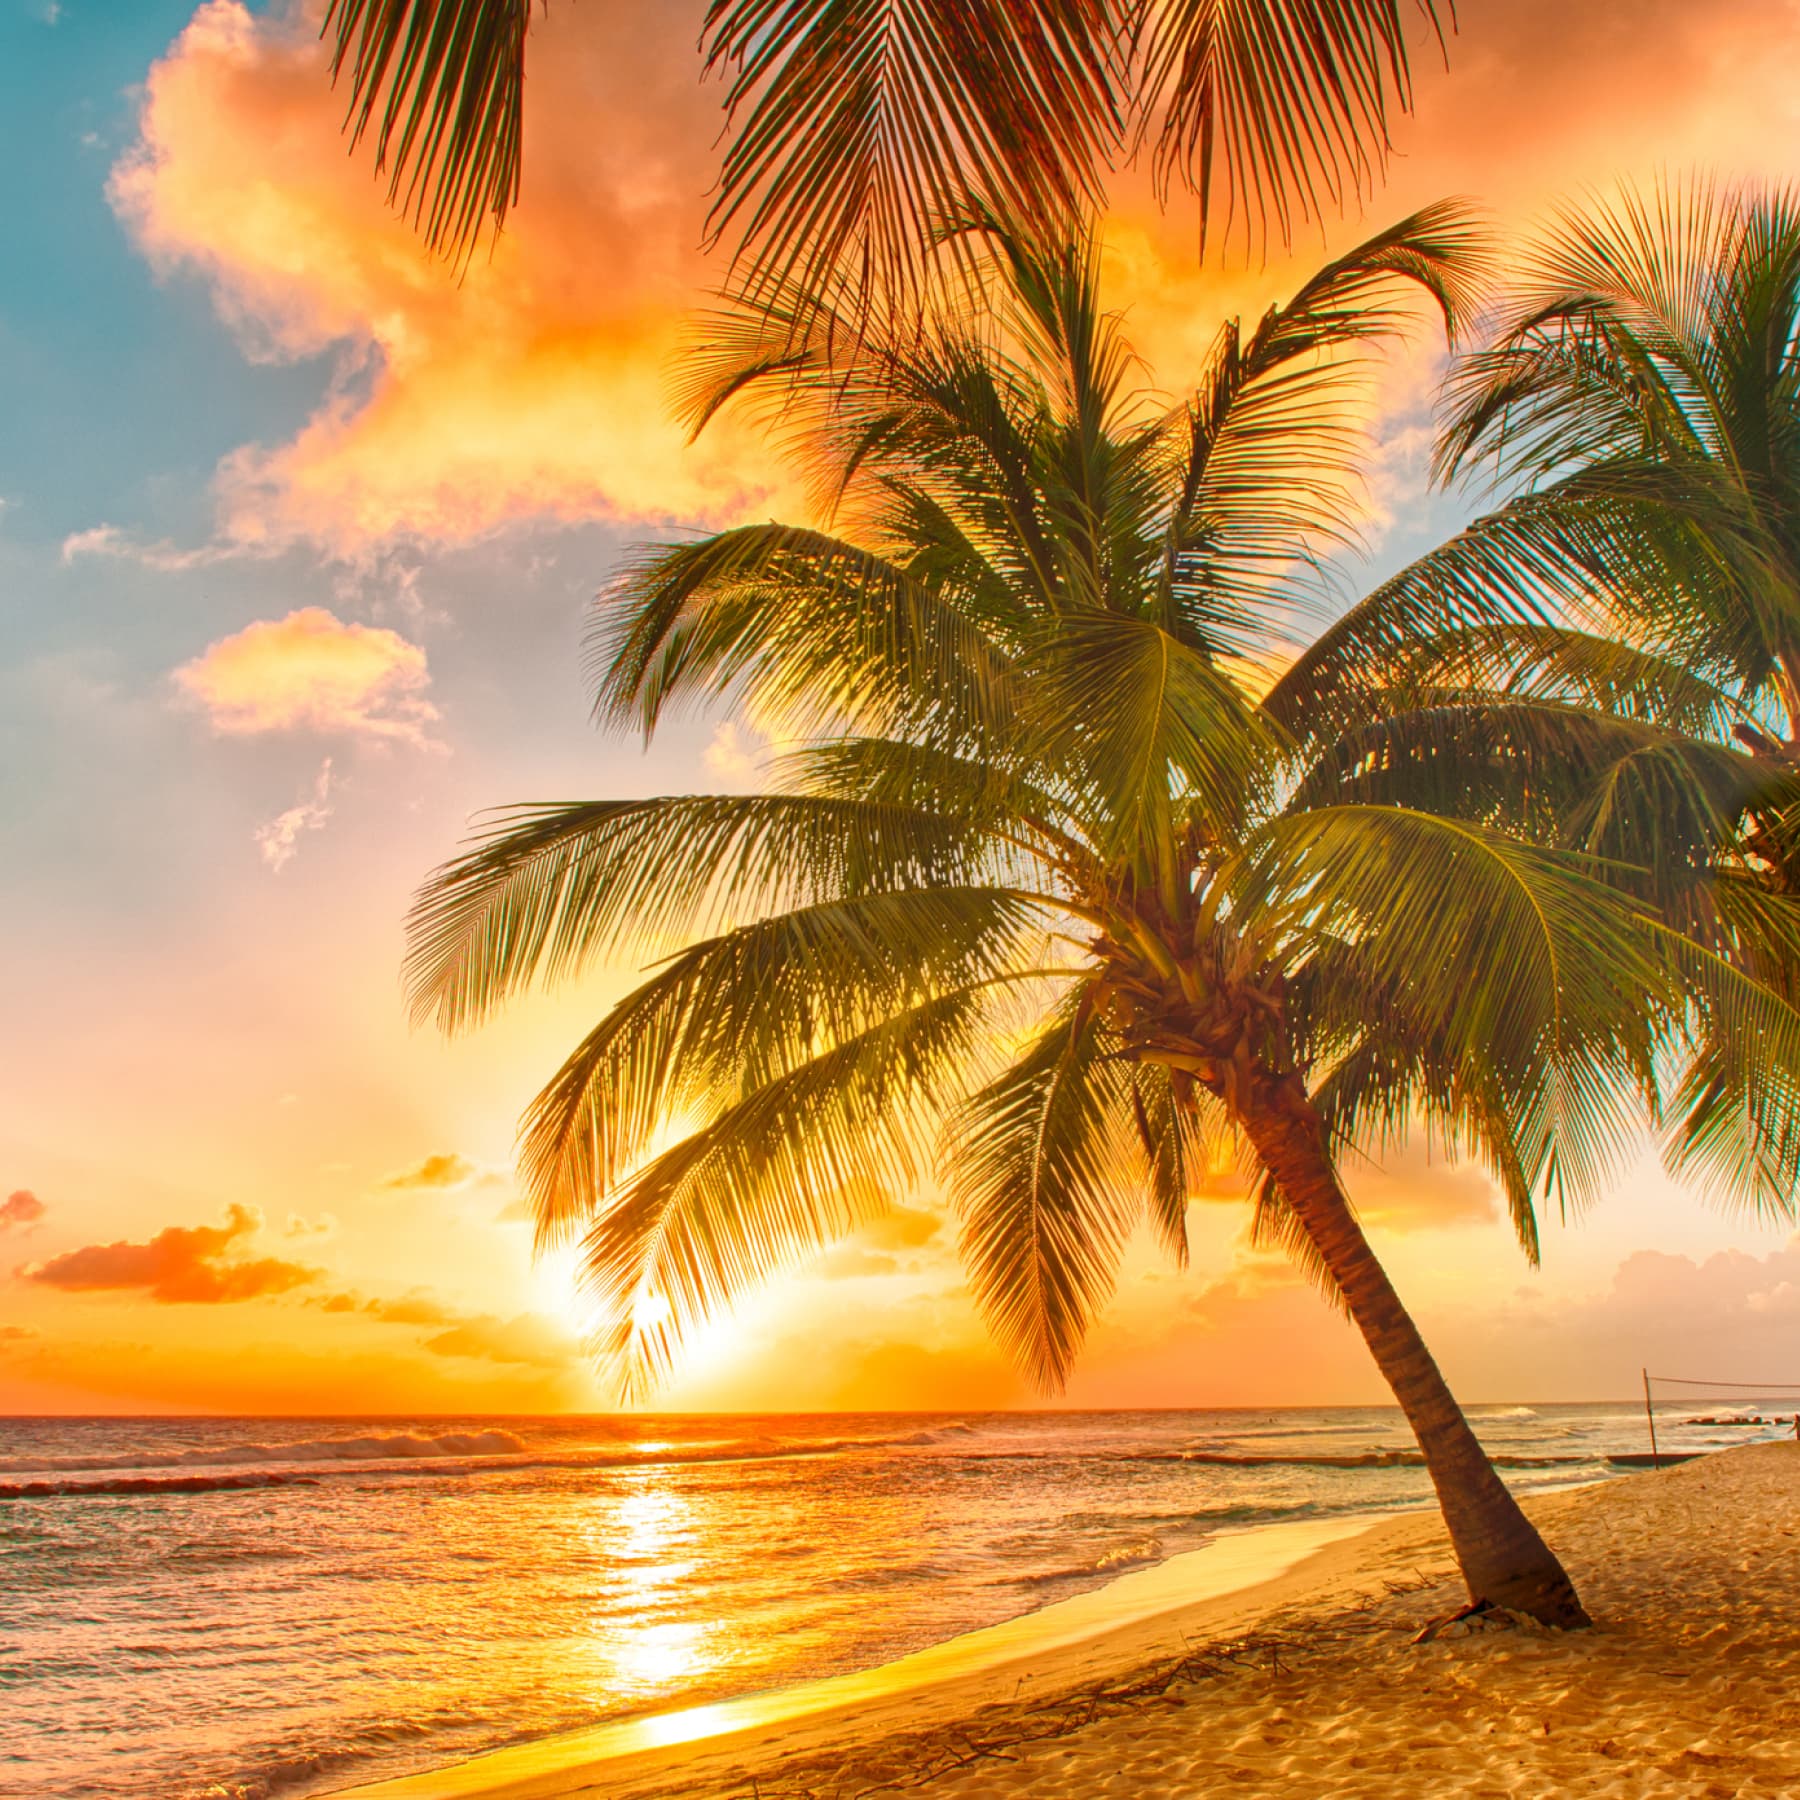 Barbados sunset with palm tree